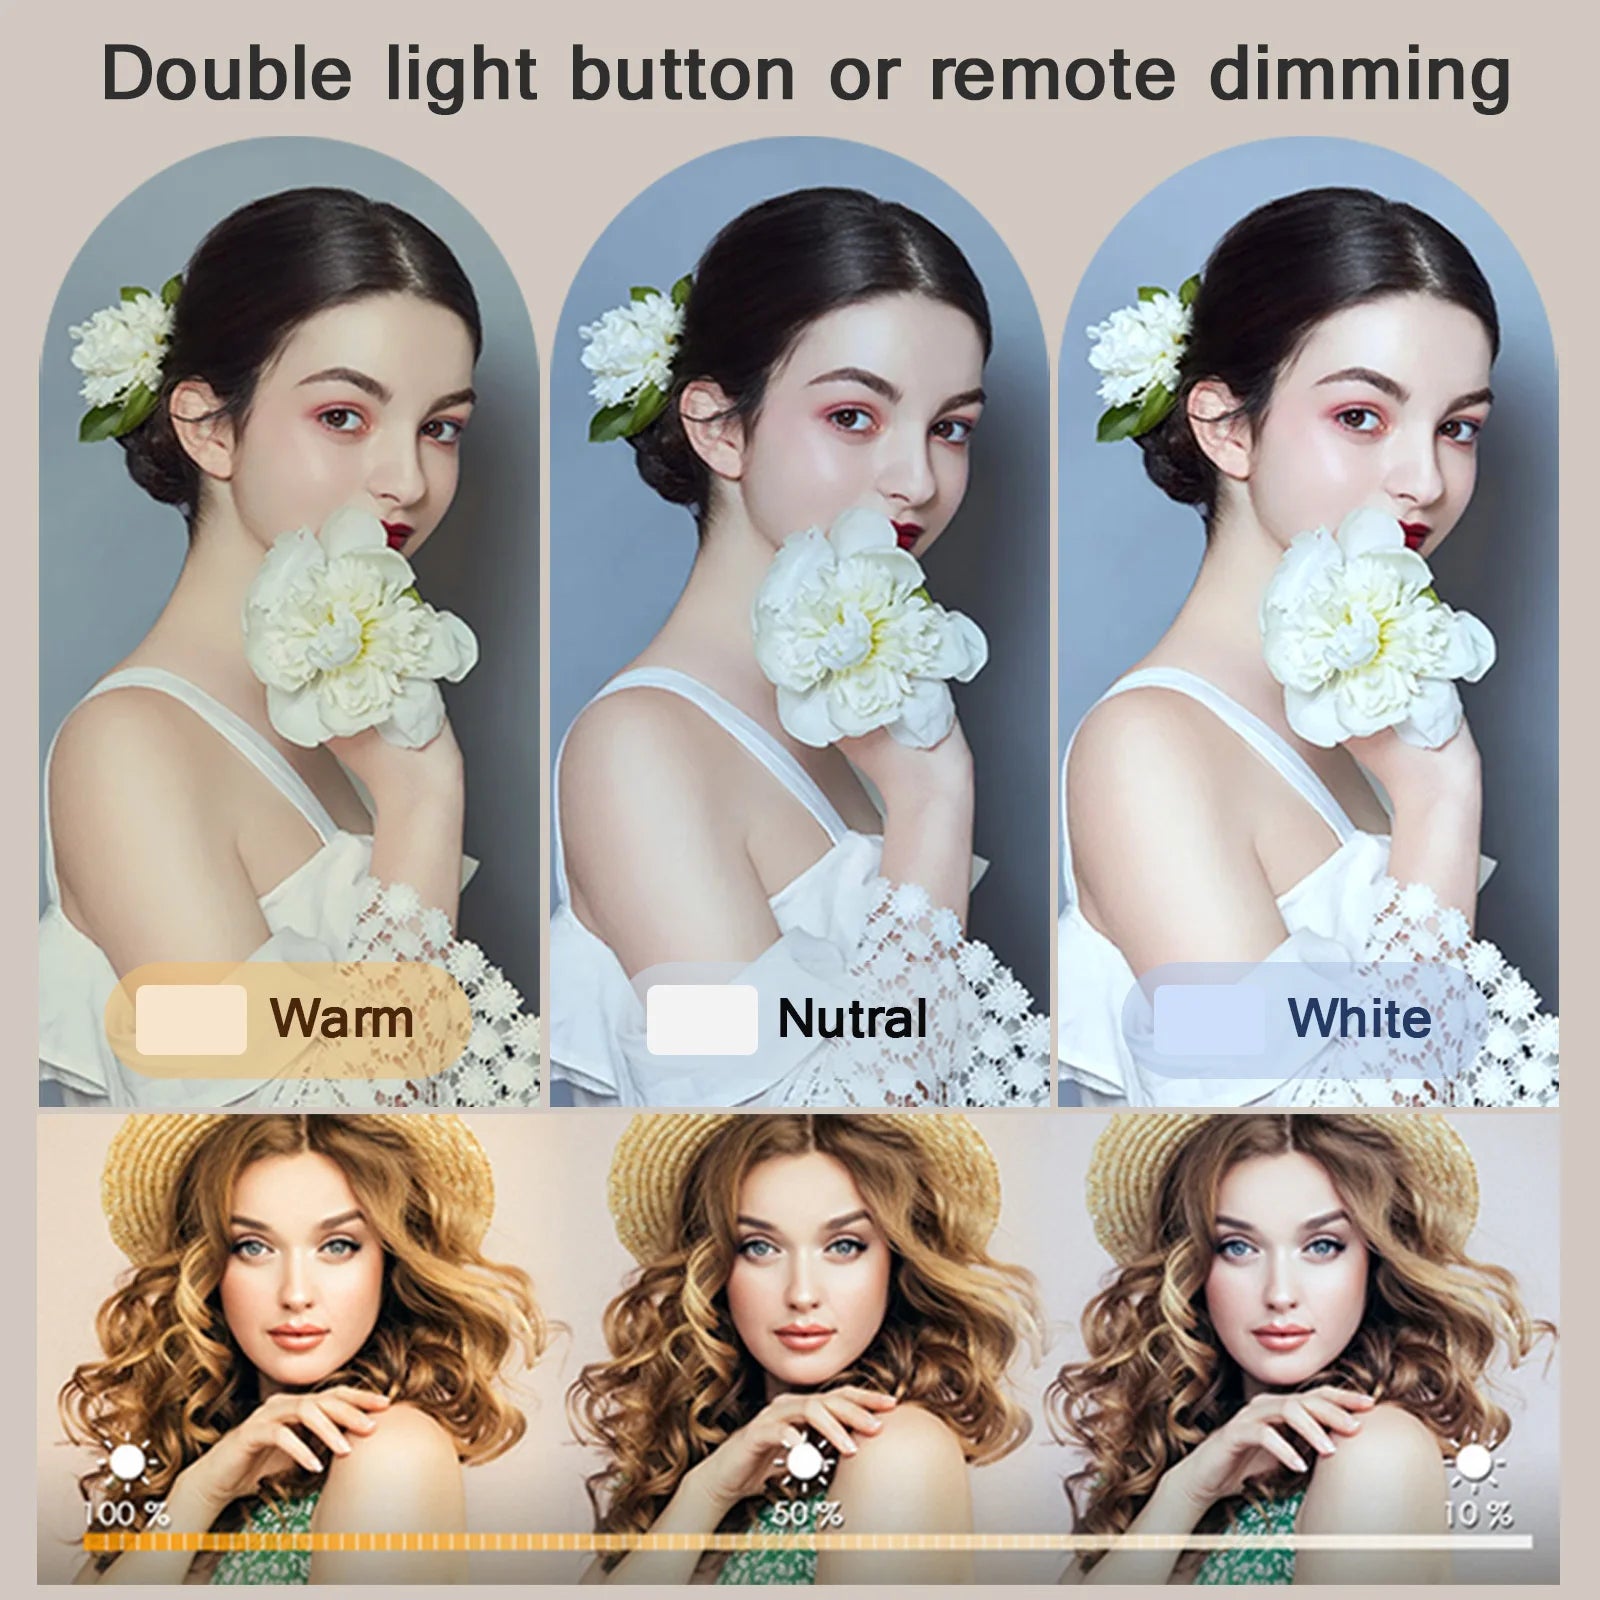 Adjustable Bi-Color LED Video Light: Perfect for Photography & Vlogging